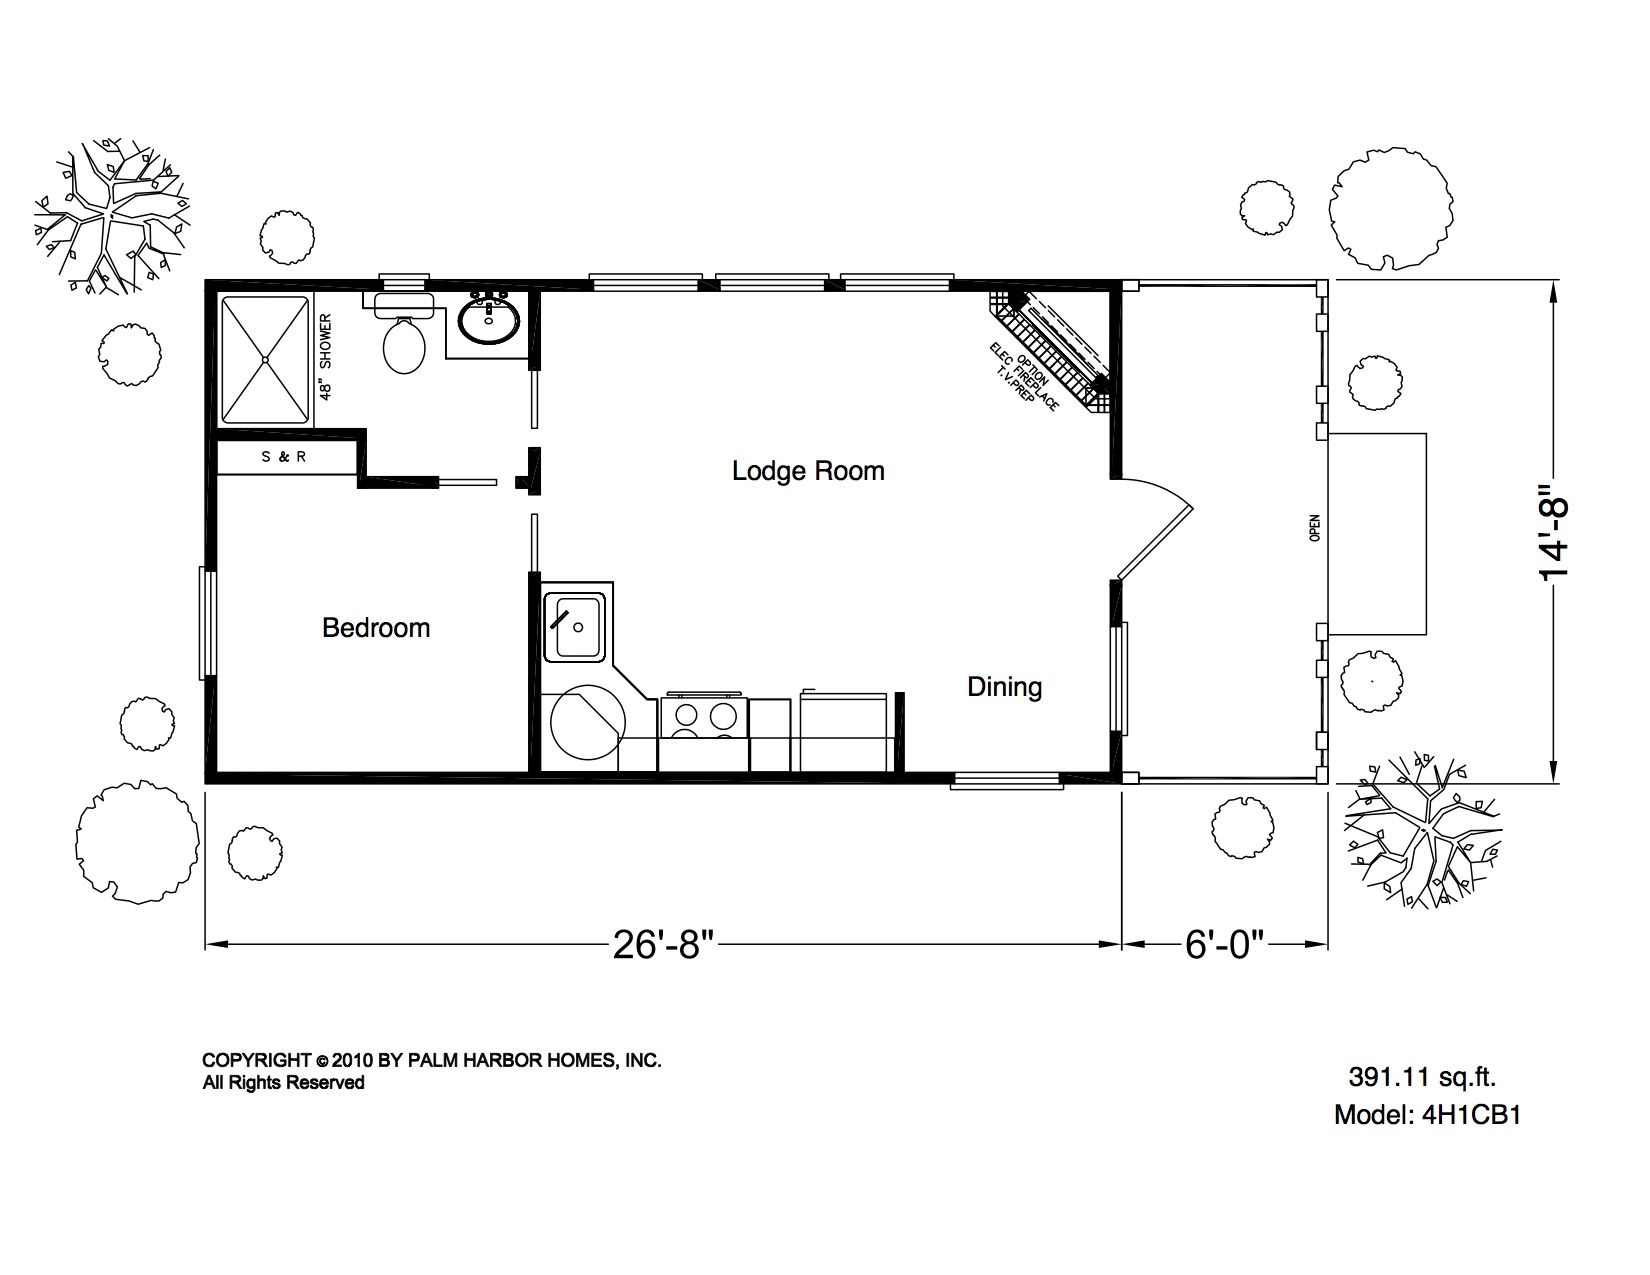 Homes Direct Modular Homes - Model 4H1CB1 - Floorplan